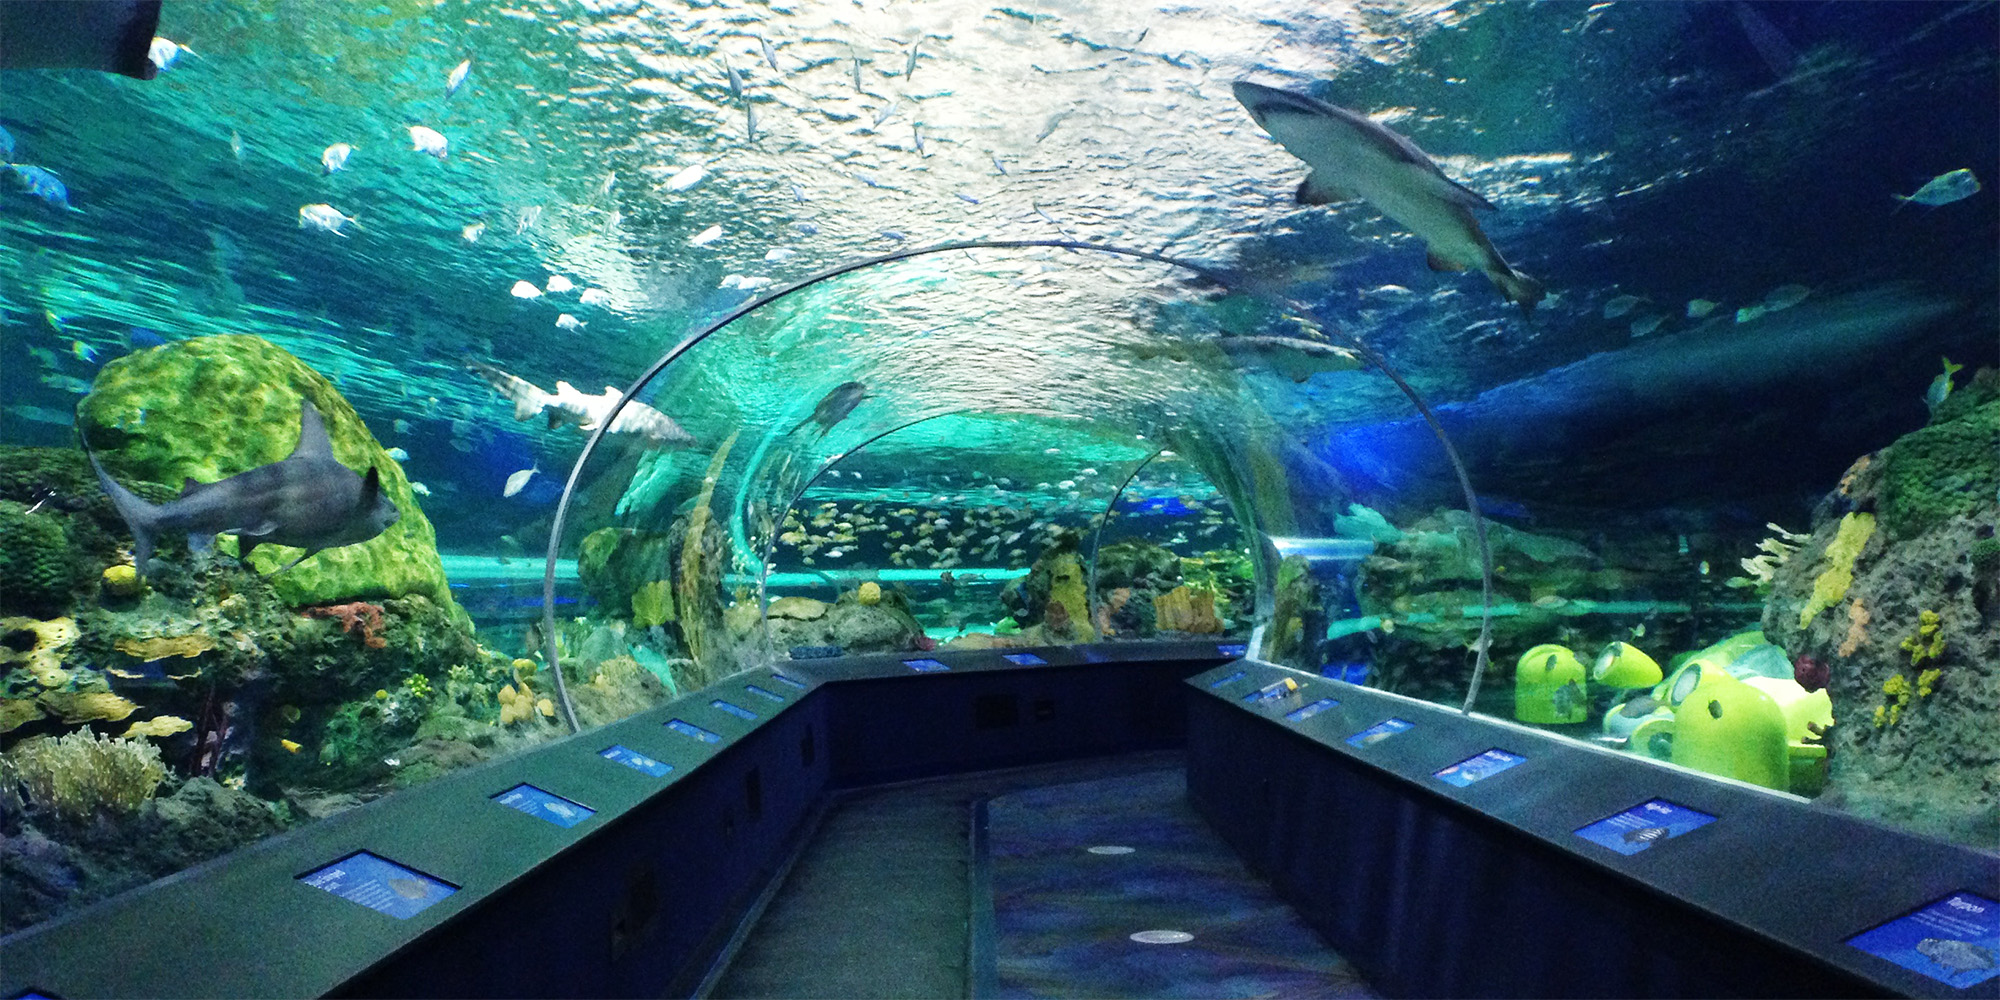 Ripleys aquarium tunnel with 360 views of sealife